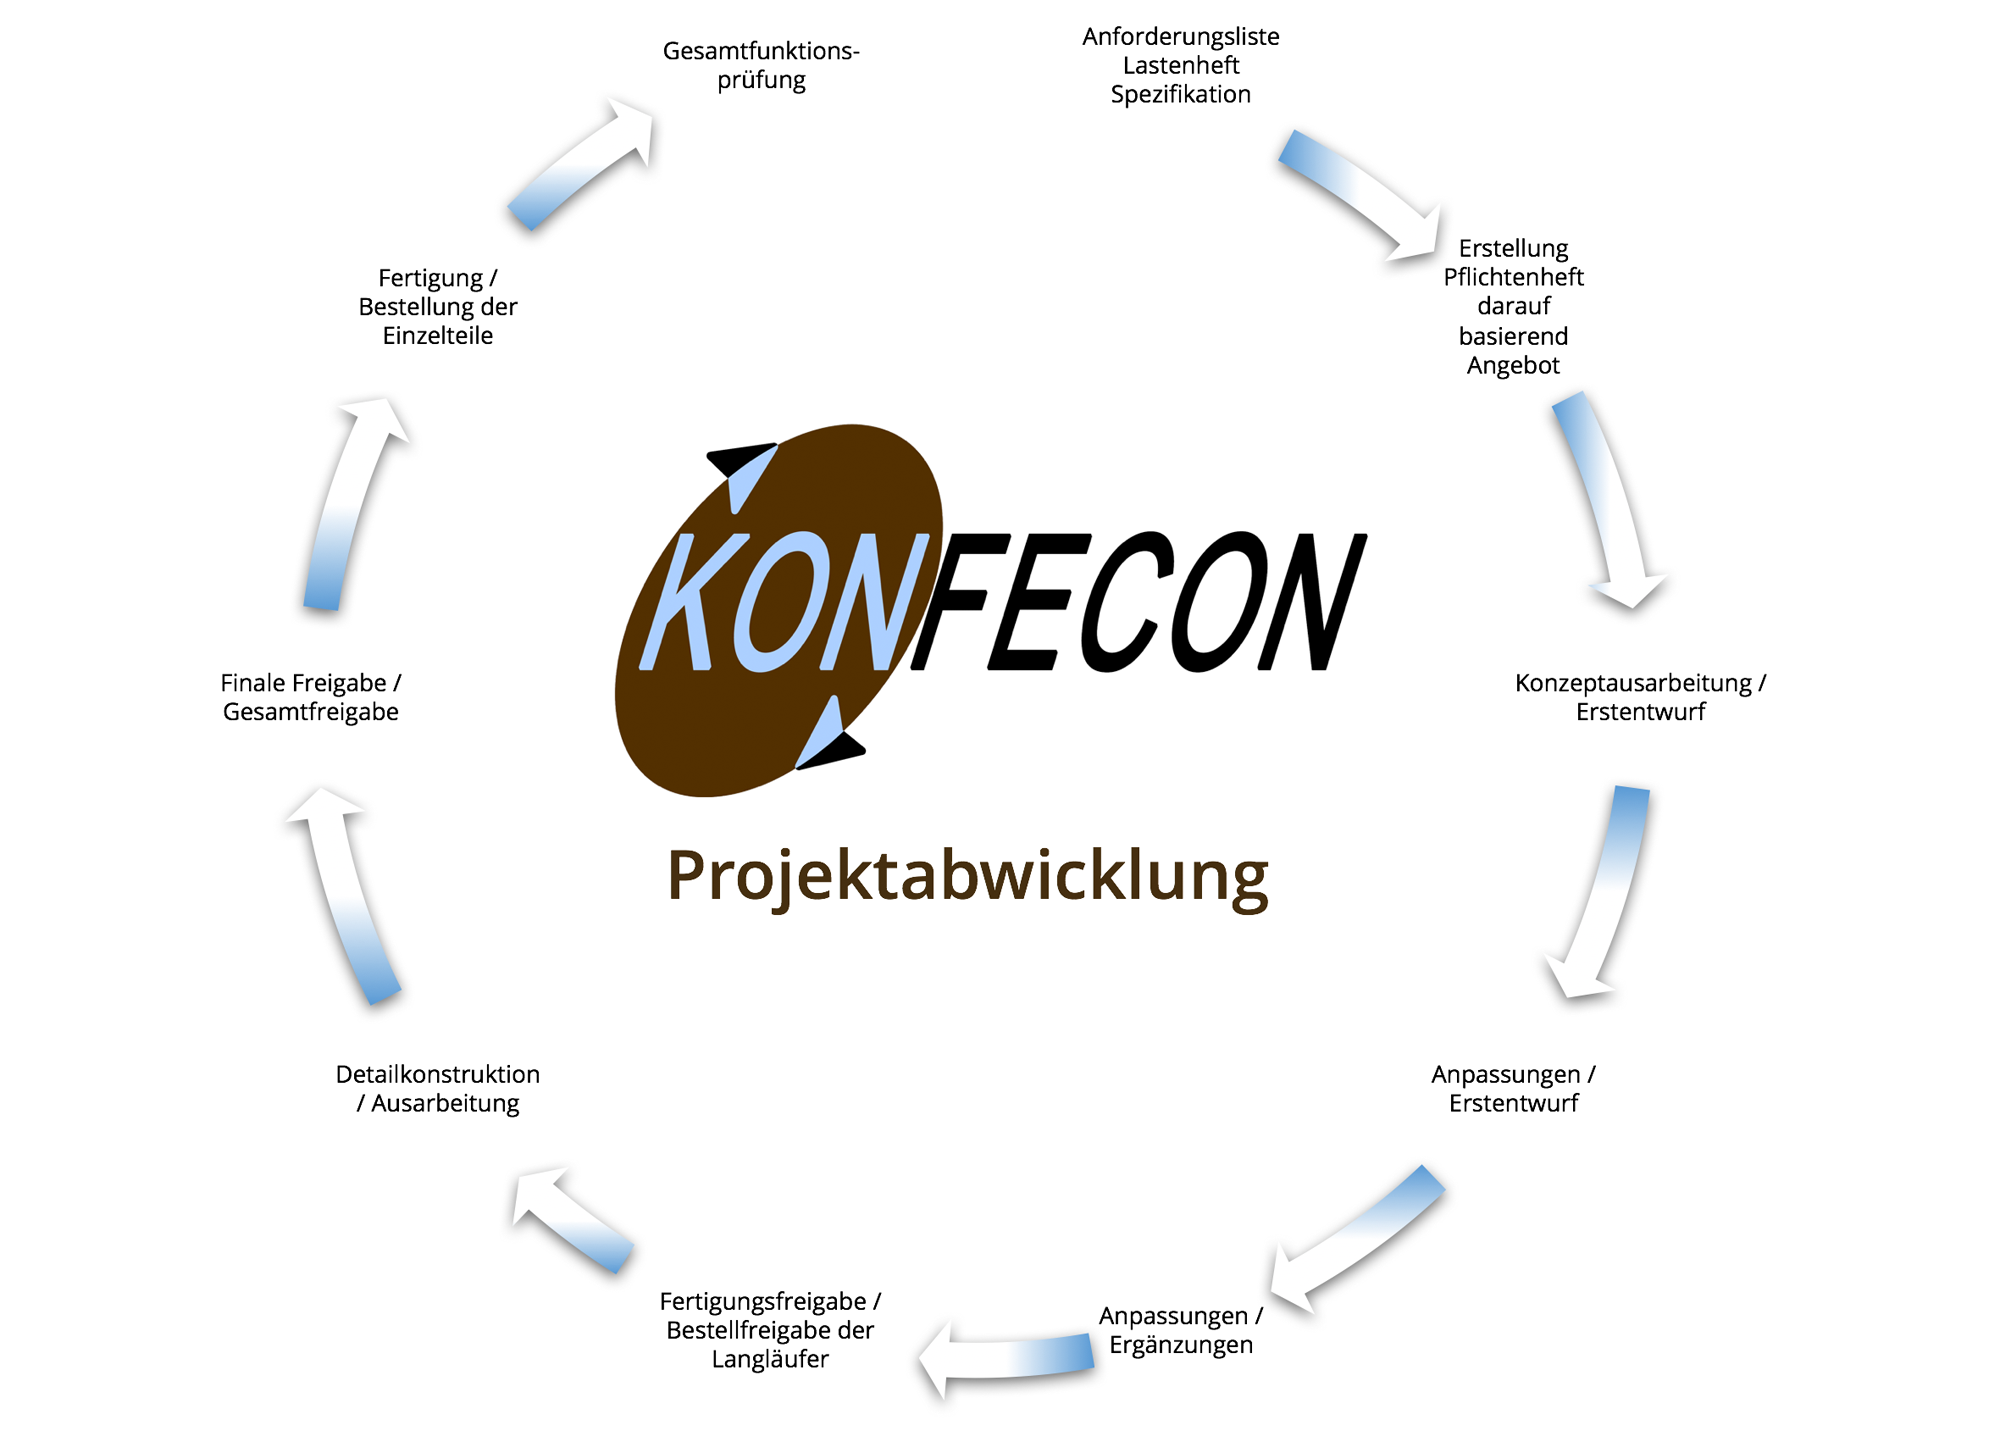 Konfecon Projektabwicklung Zyklus